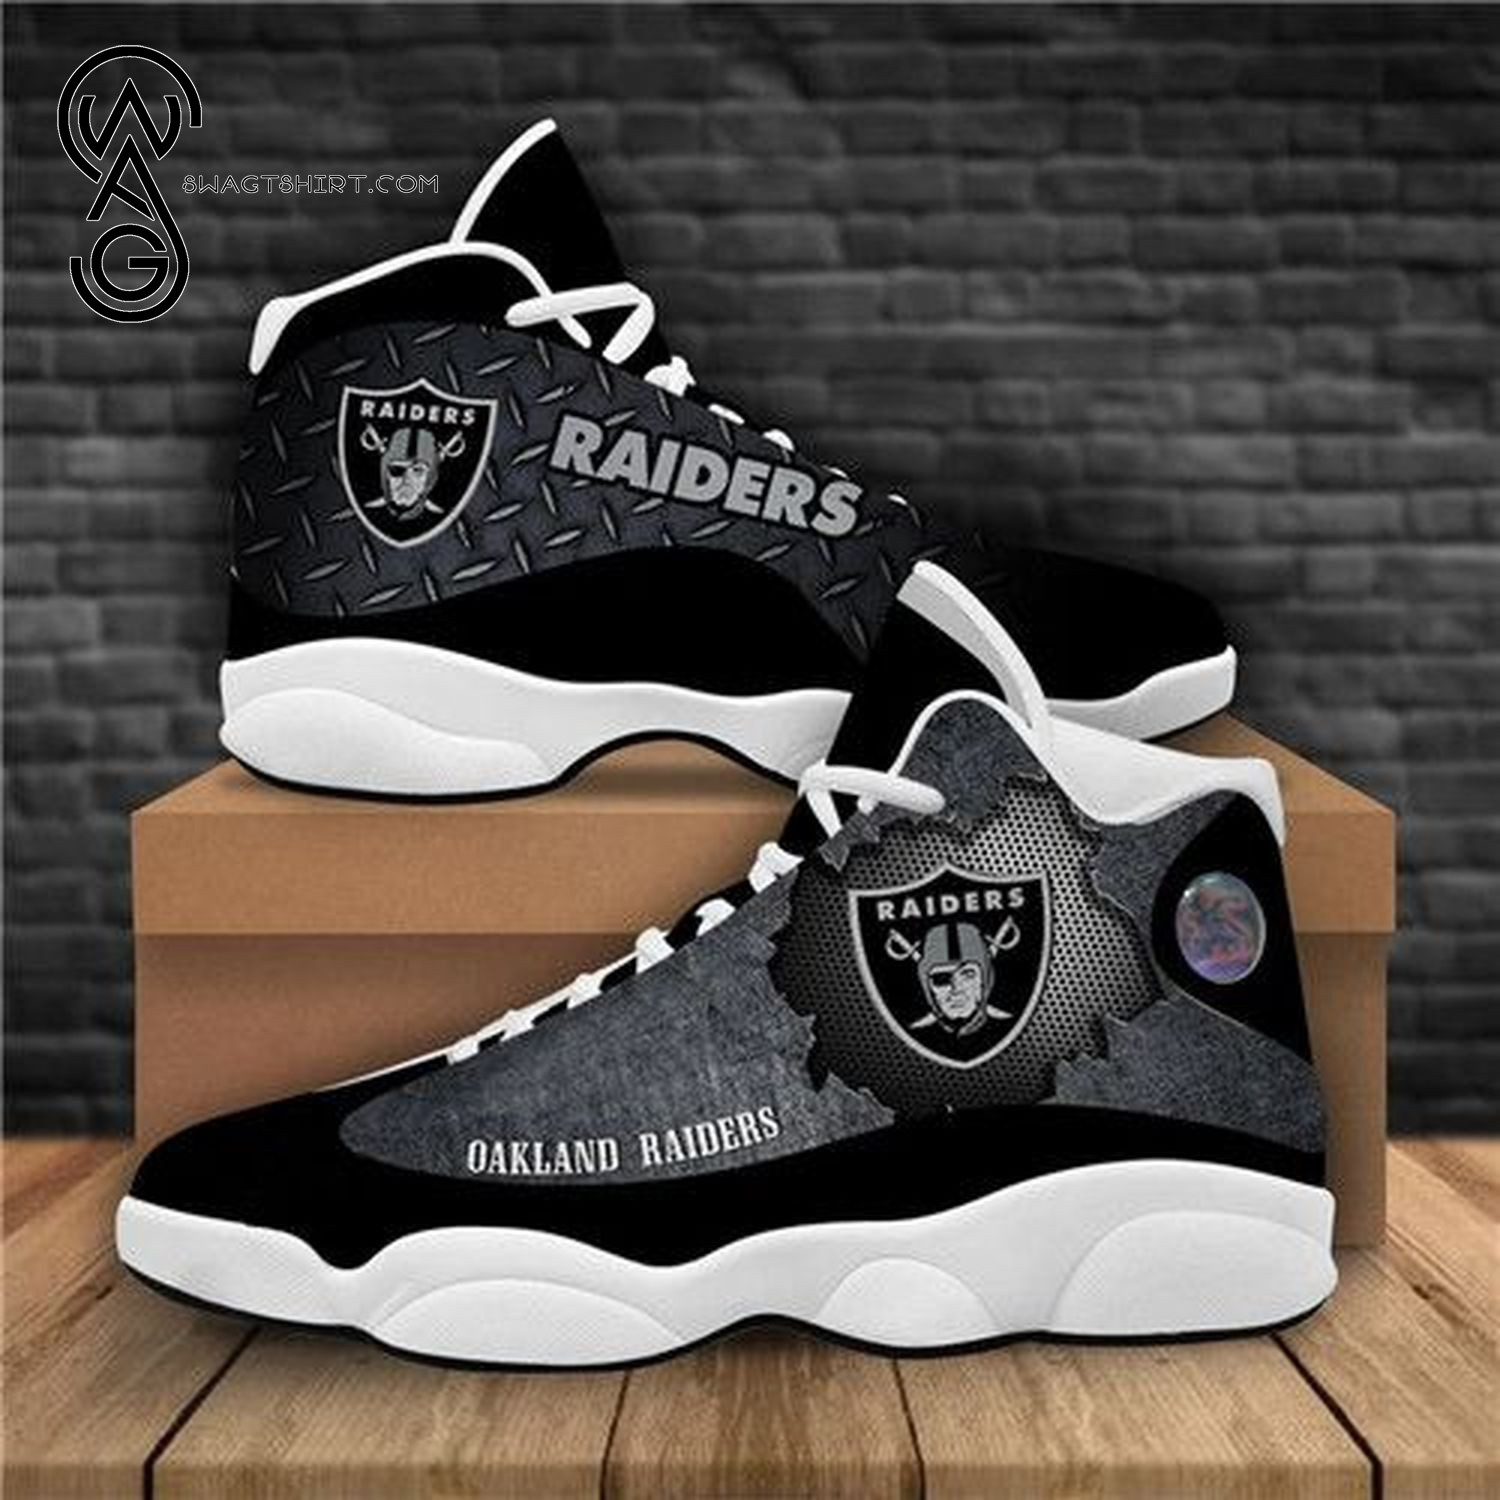 Oakland Raiders Football Team Air Jordan 13 Shoes